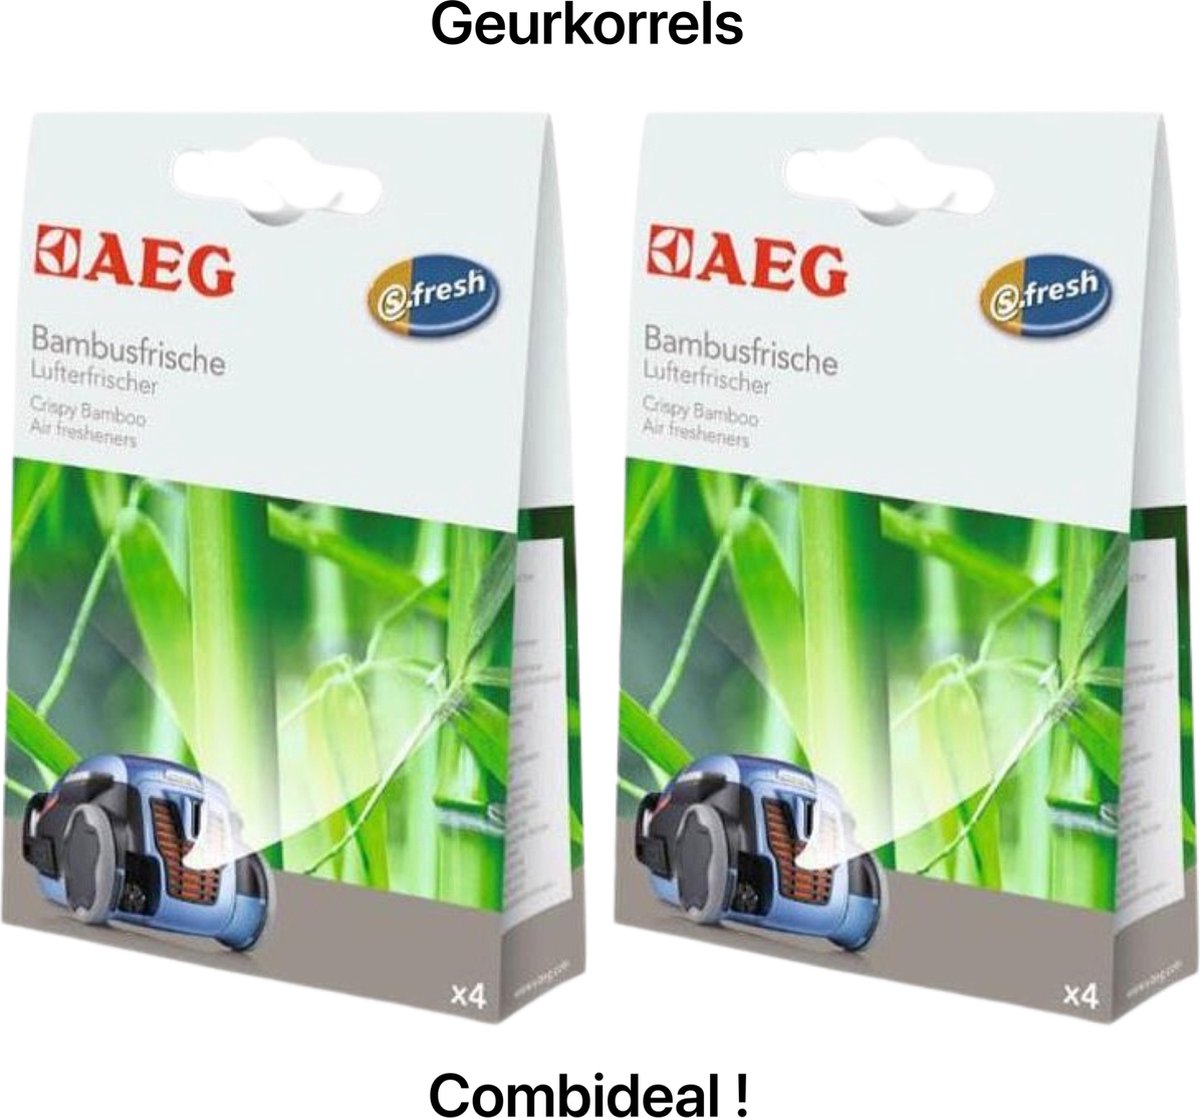 AEG - S-Fresh - Geurkorrels - Crispy Bamboo (geur) - Air Freshners - Geurparels - COMBIDEAL - 8 Zakjes